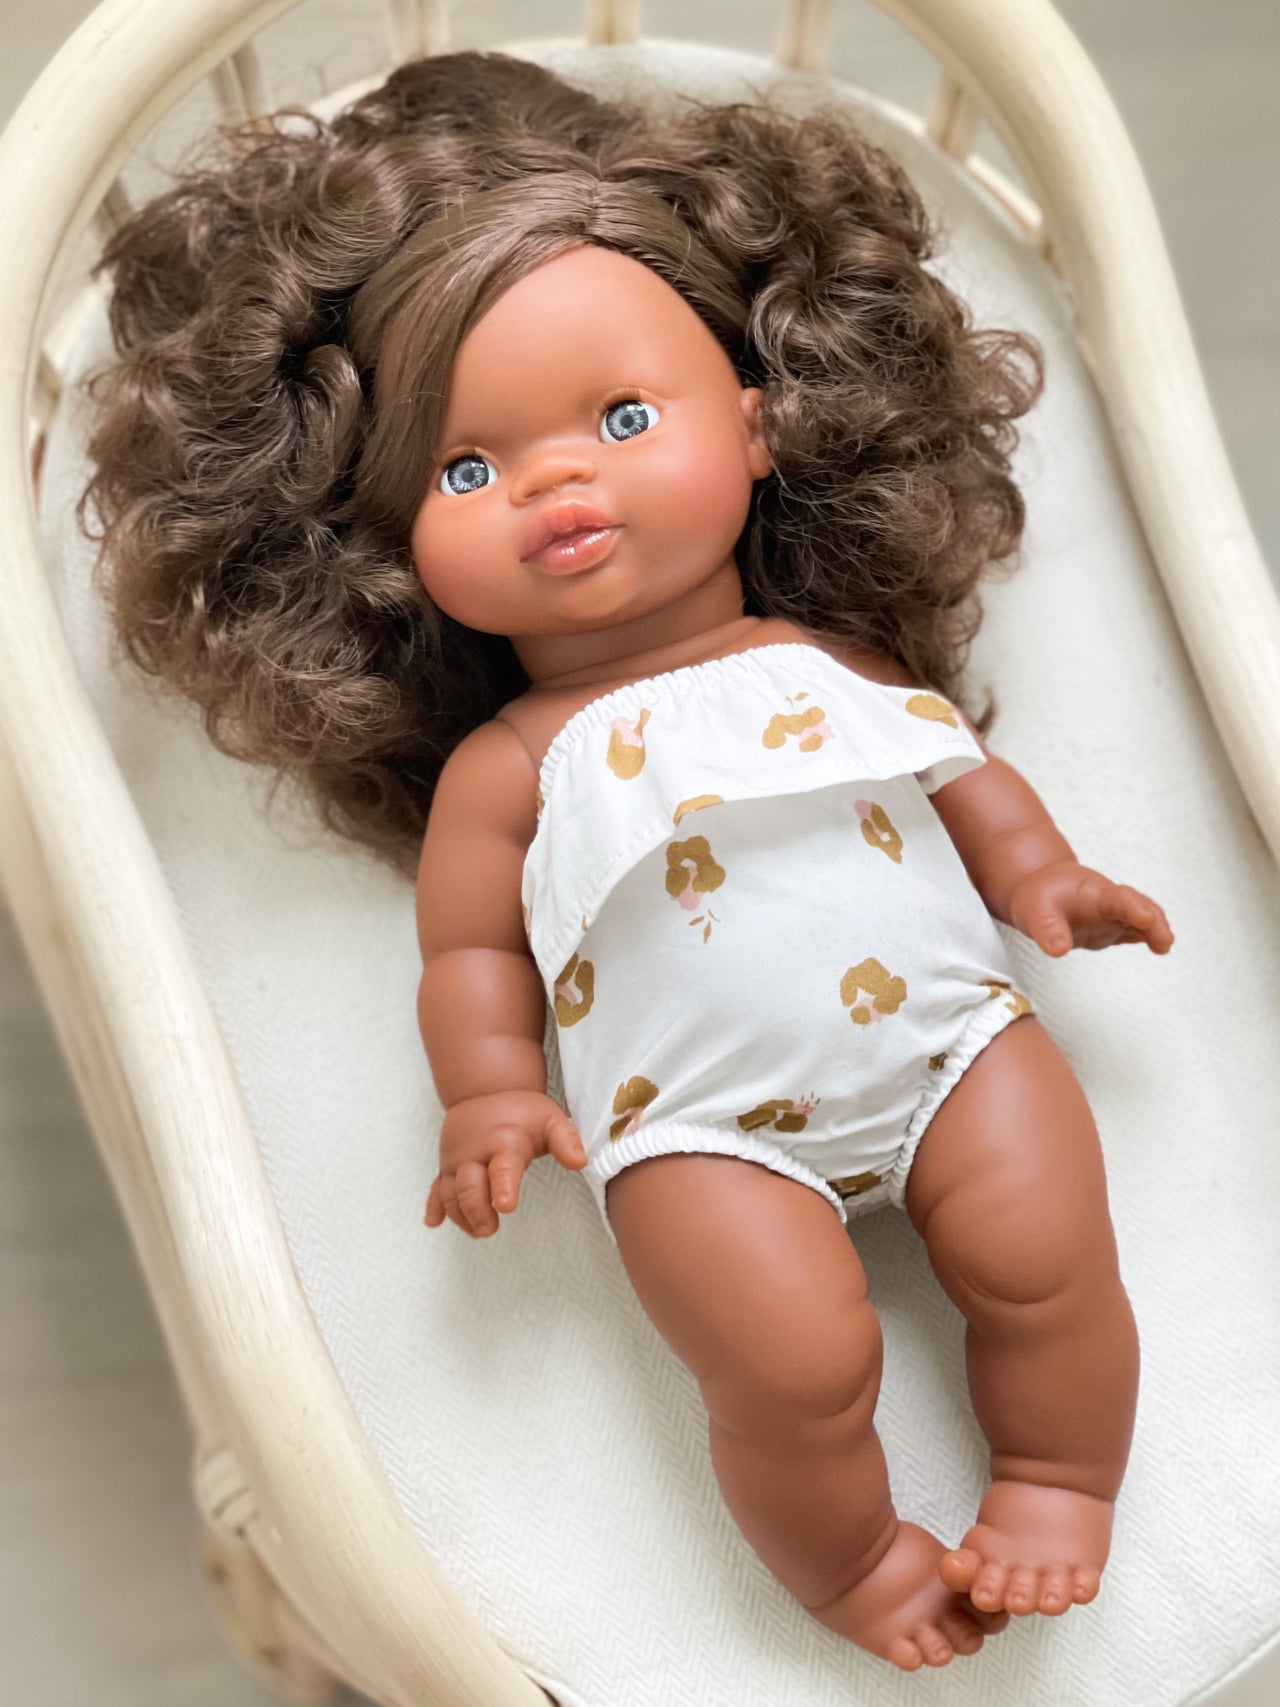 Minikane Charlie Black Baby Girl Doll with Blue Eyes